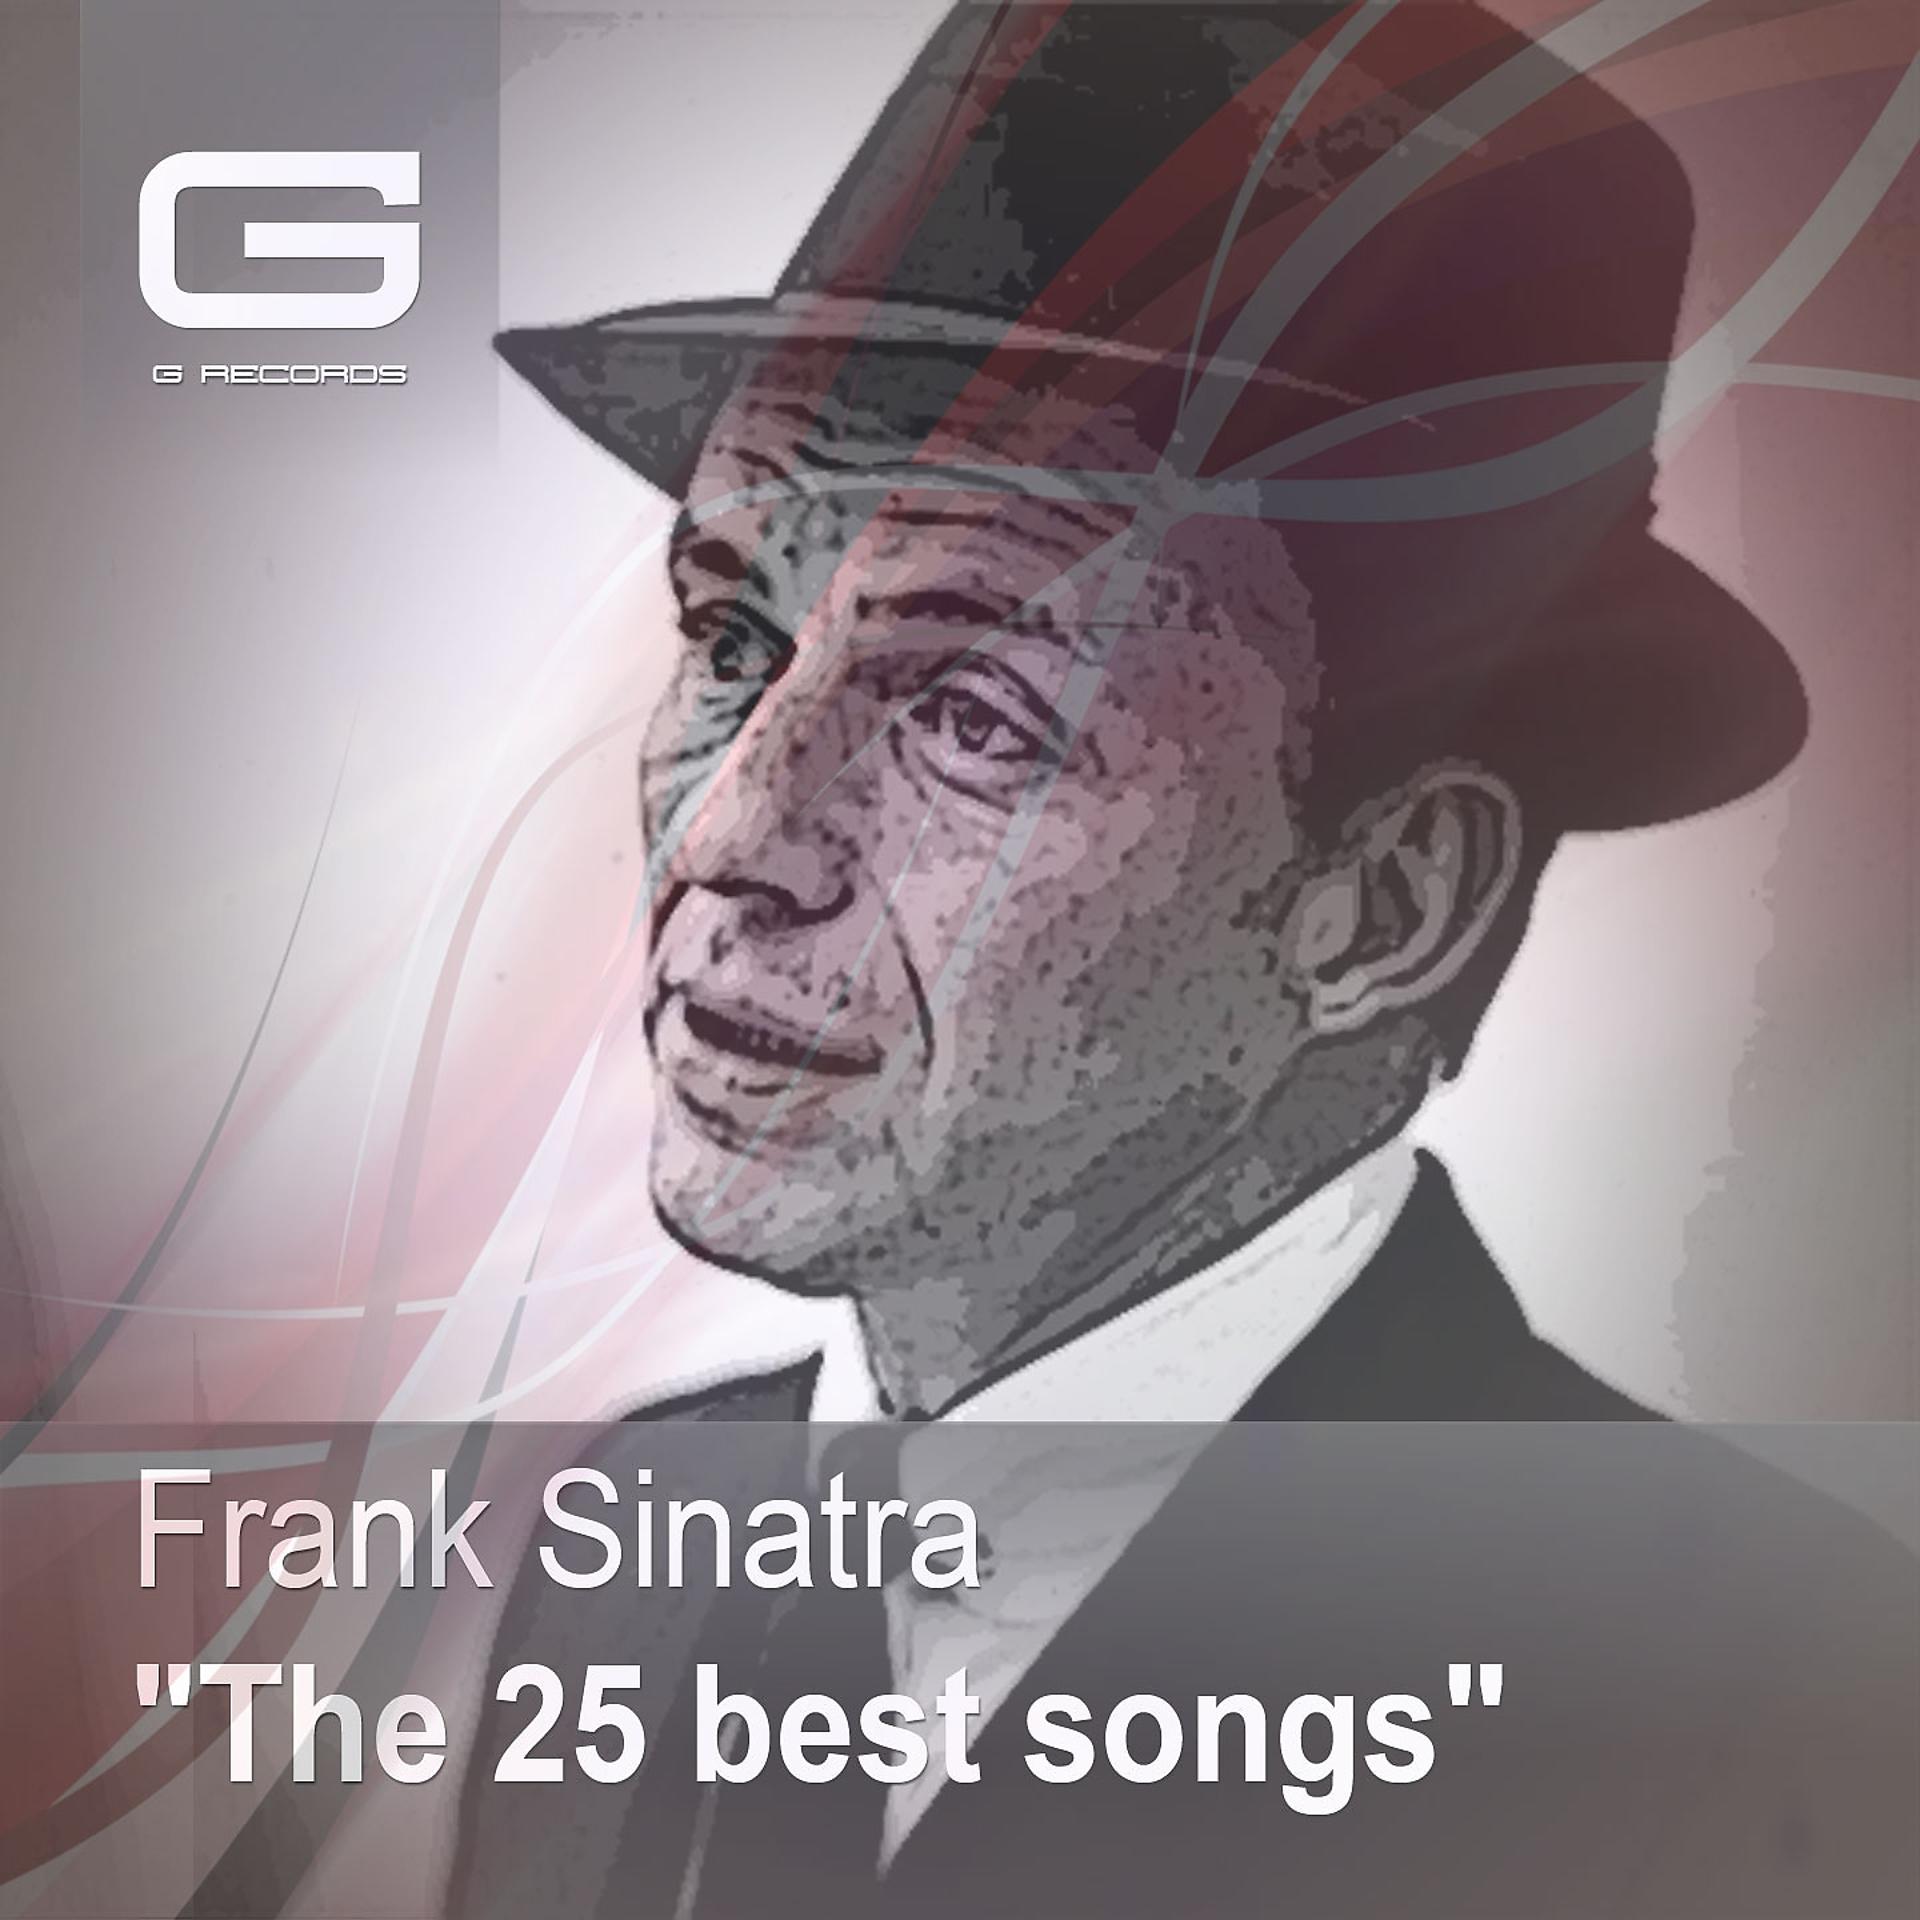 Долли Синатра. Frank Sinatra Songs. Strangers in the Night Фрэнк Синатра. The best is yet to come Фрэнк Синатра. Фрэнк треки